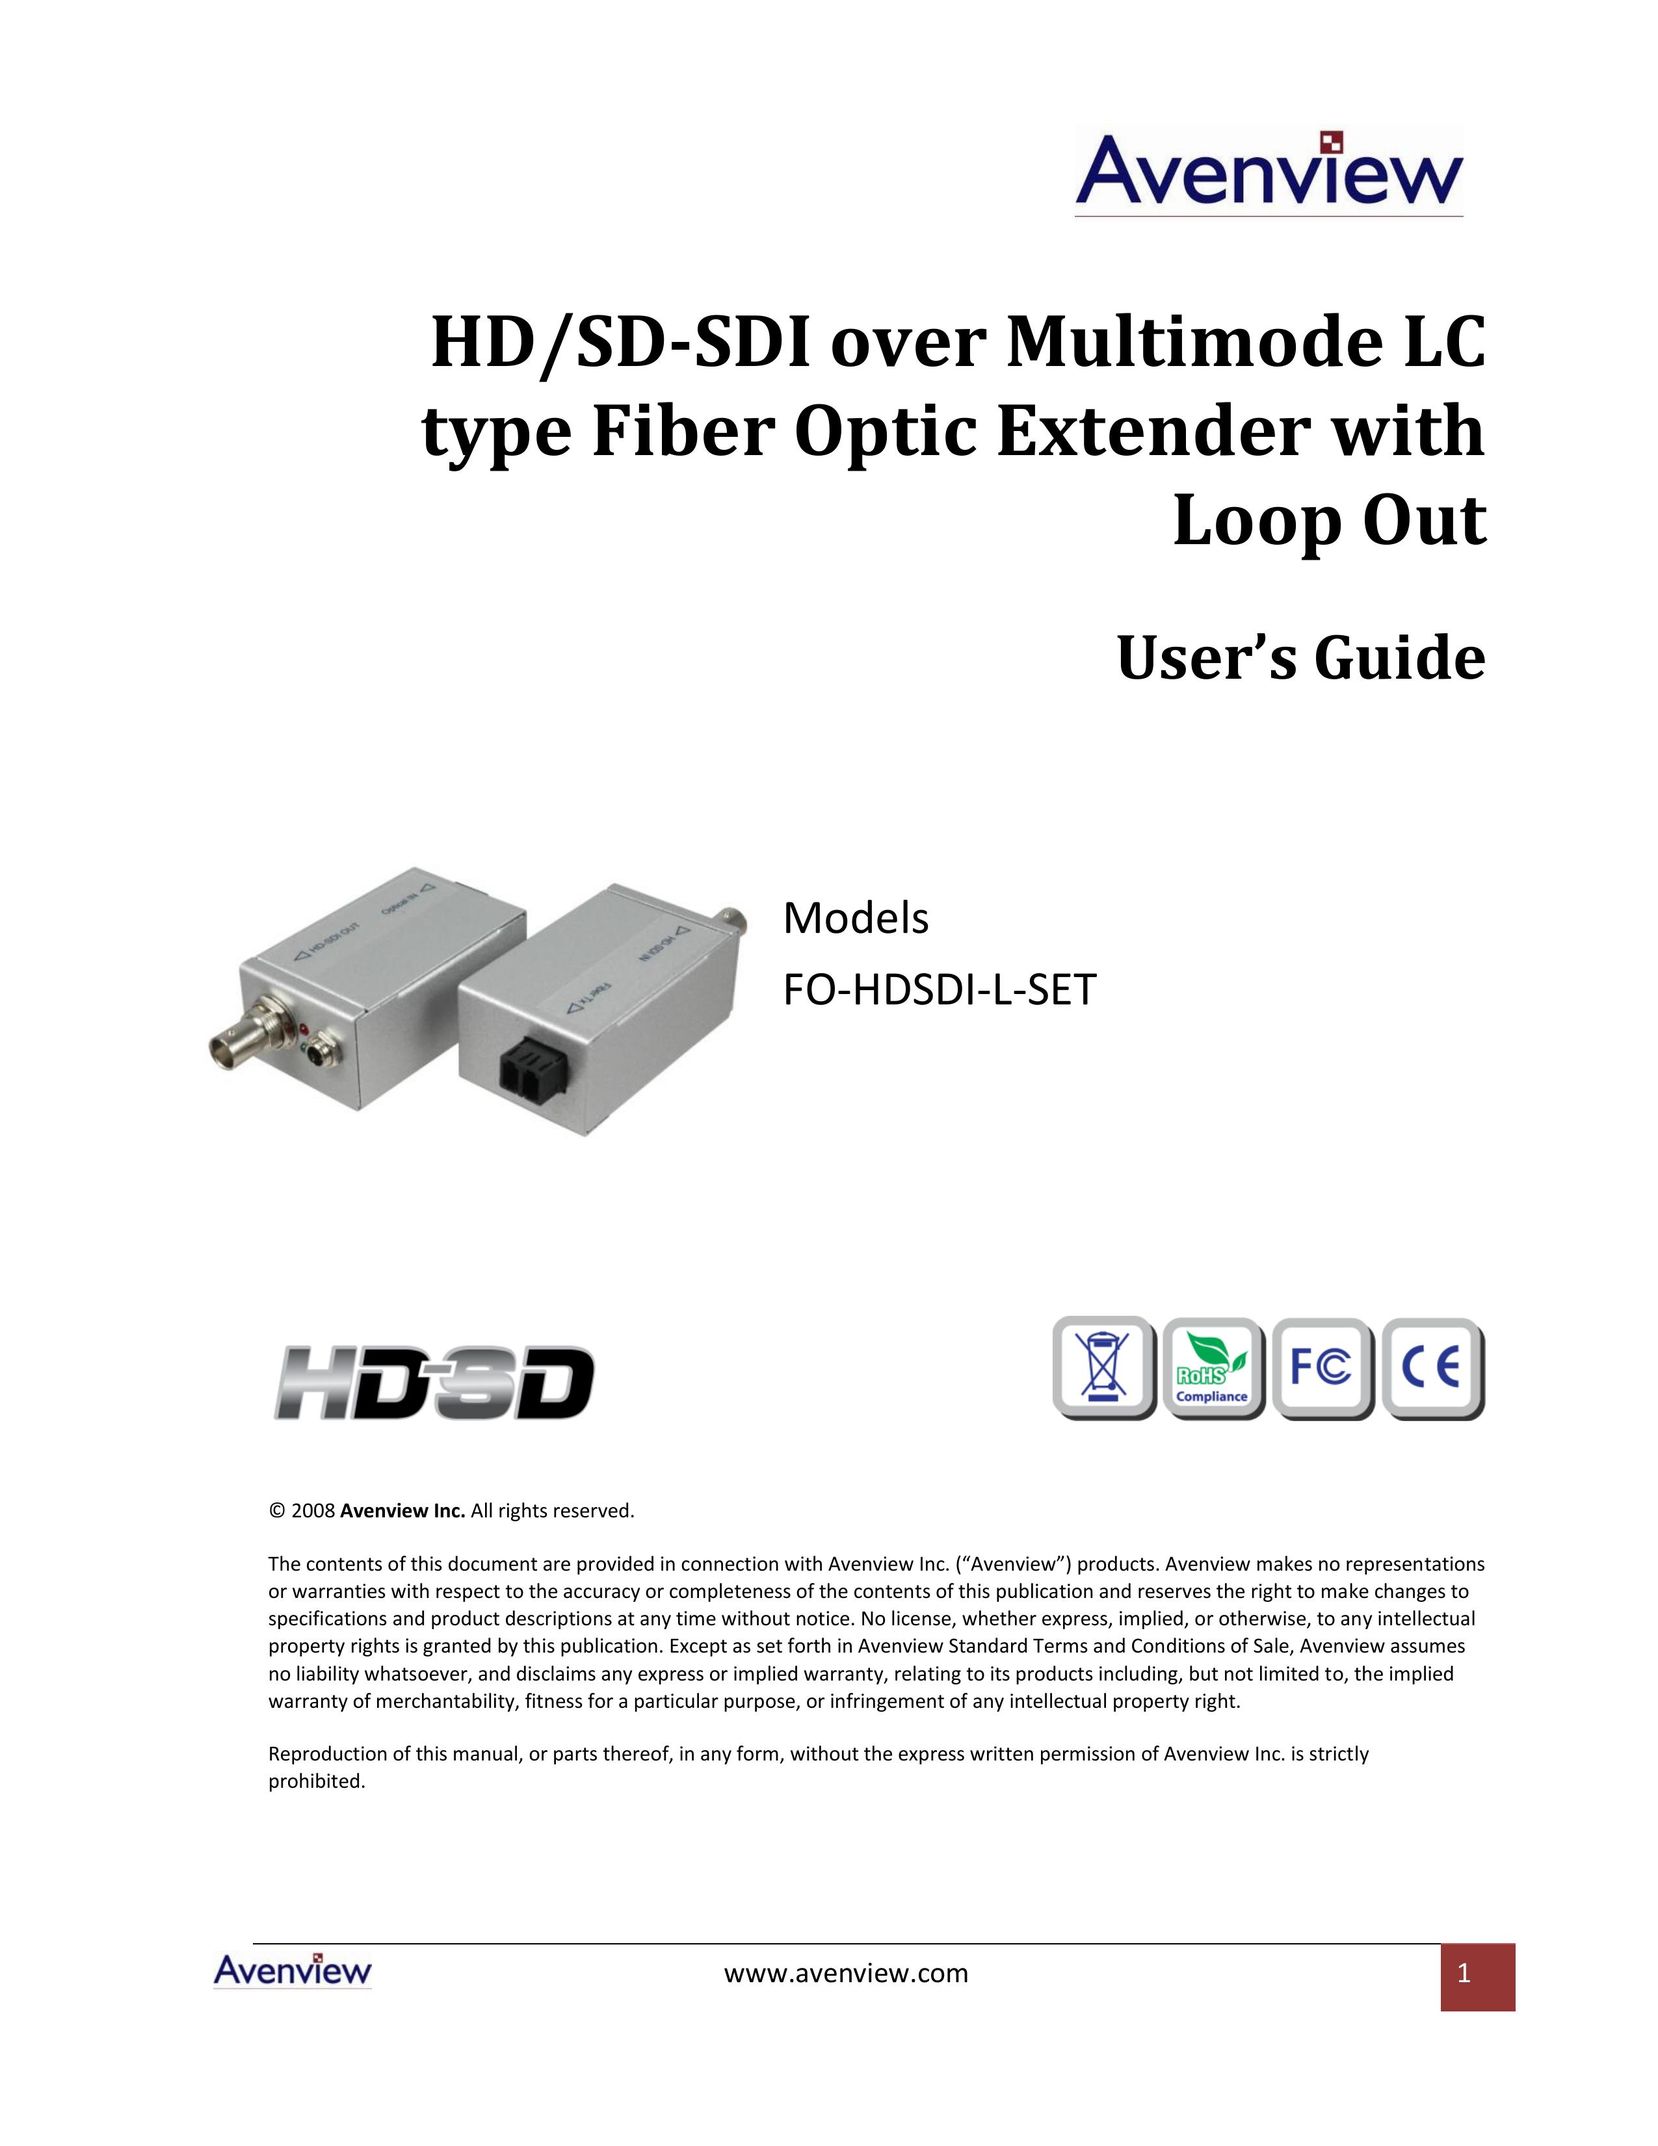 Avenview FO-HDSDI-L-SET Network Card User Manual